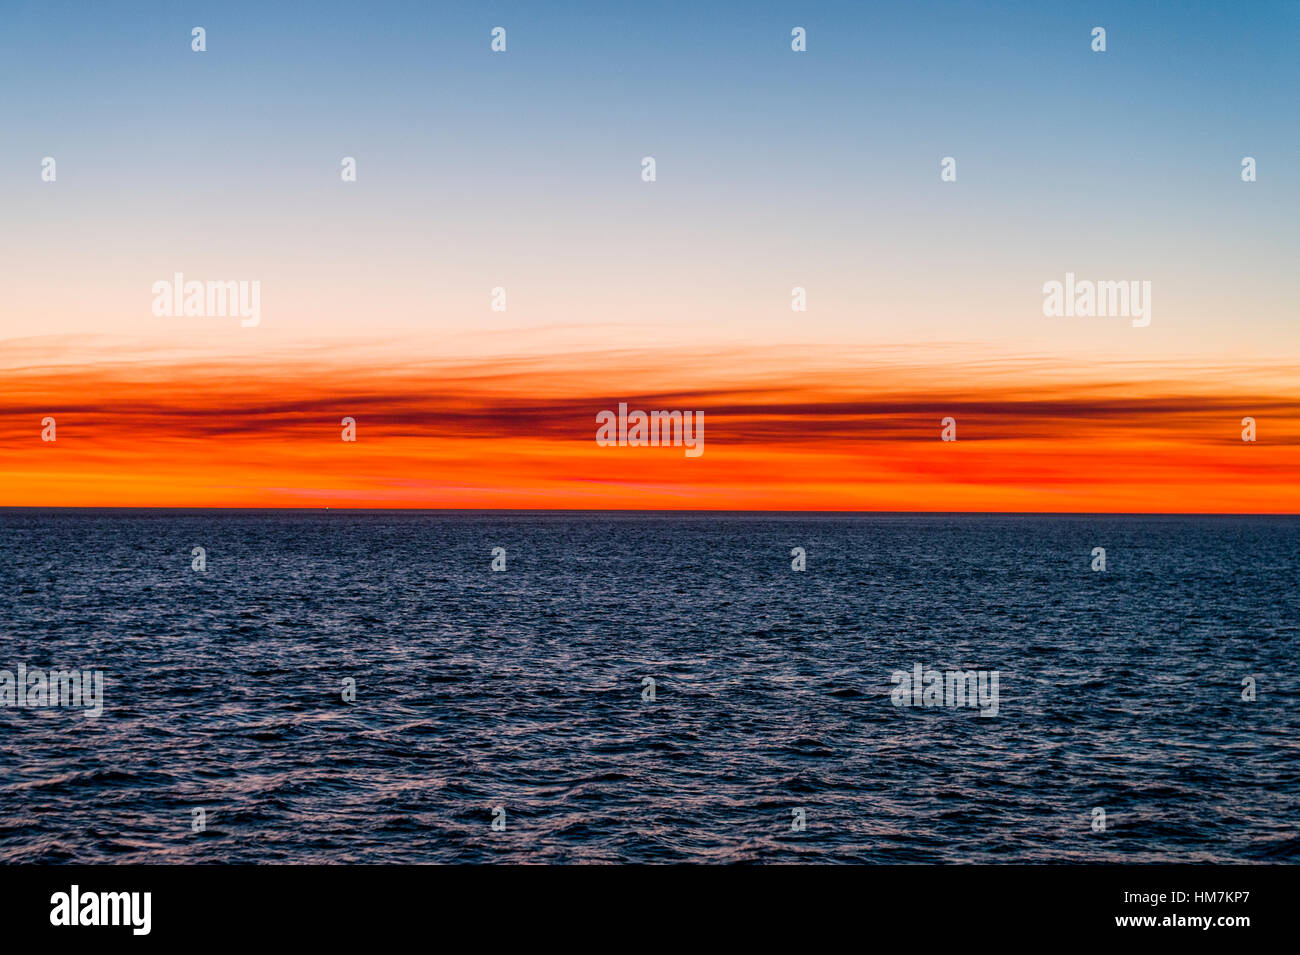 Flammende rote Abendrot über den Ozean Horizont bei Sonnenuntergang. Stockfoto